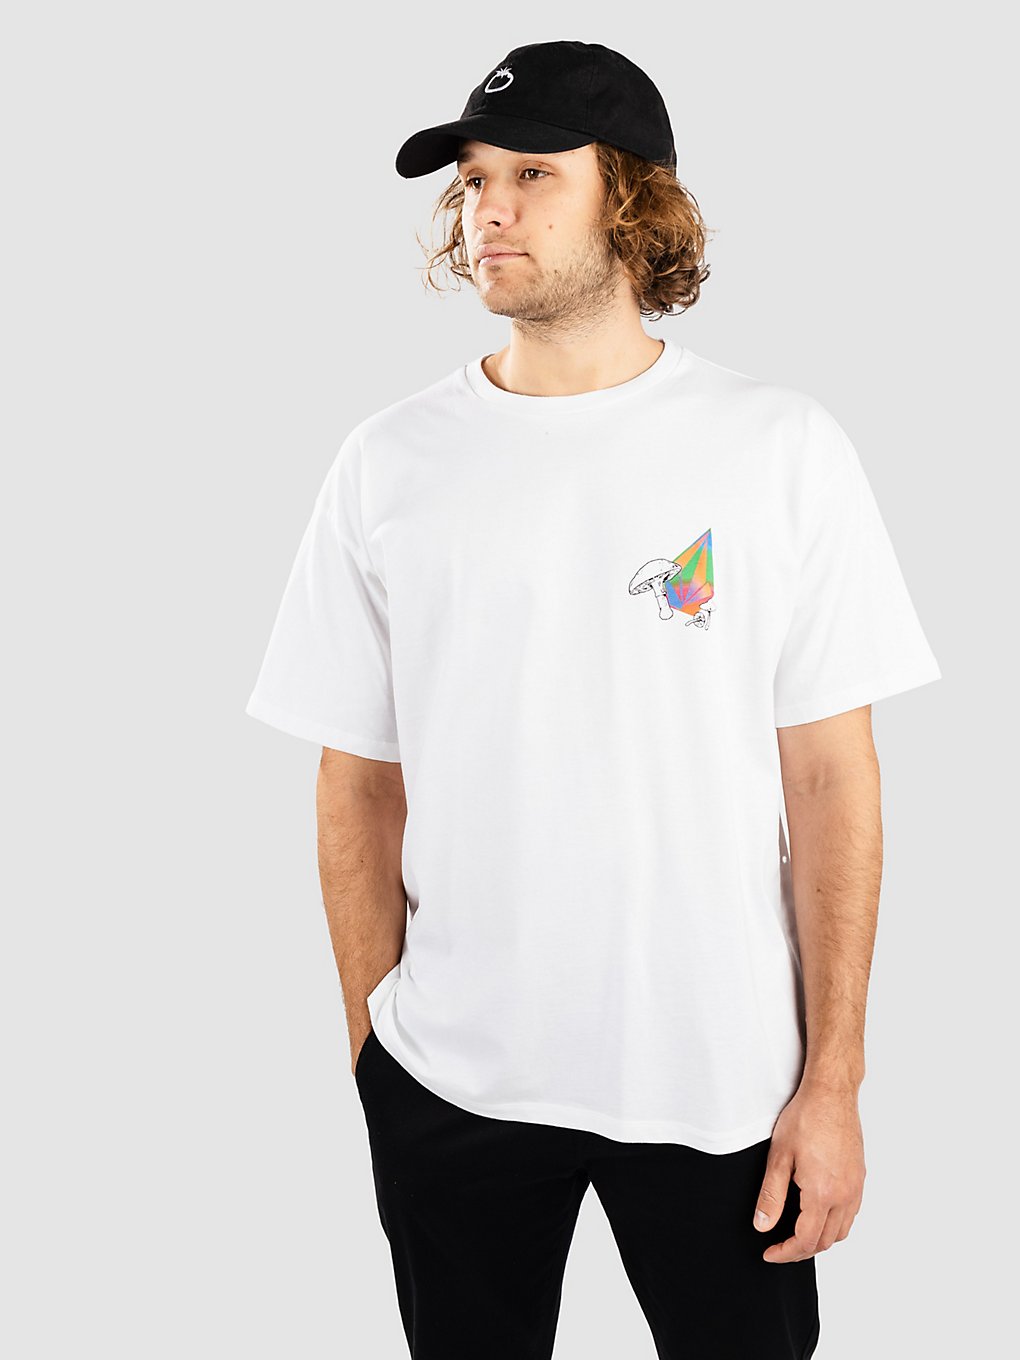 Volcom Fa C.Abbott x French Loose Fit 2 T-Shirt white kaufen